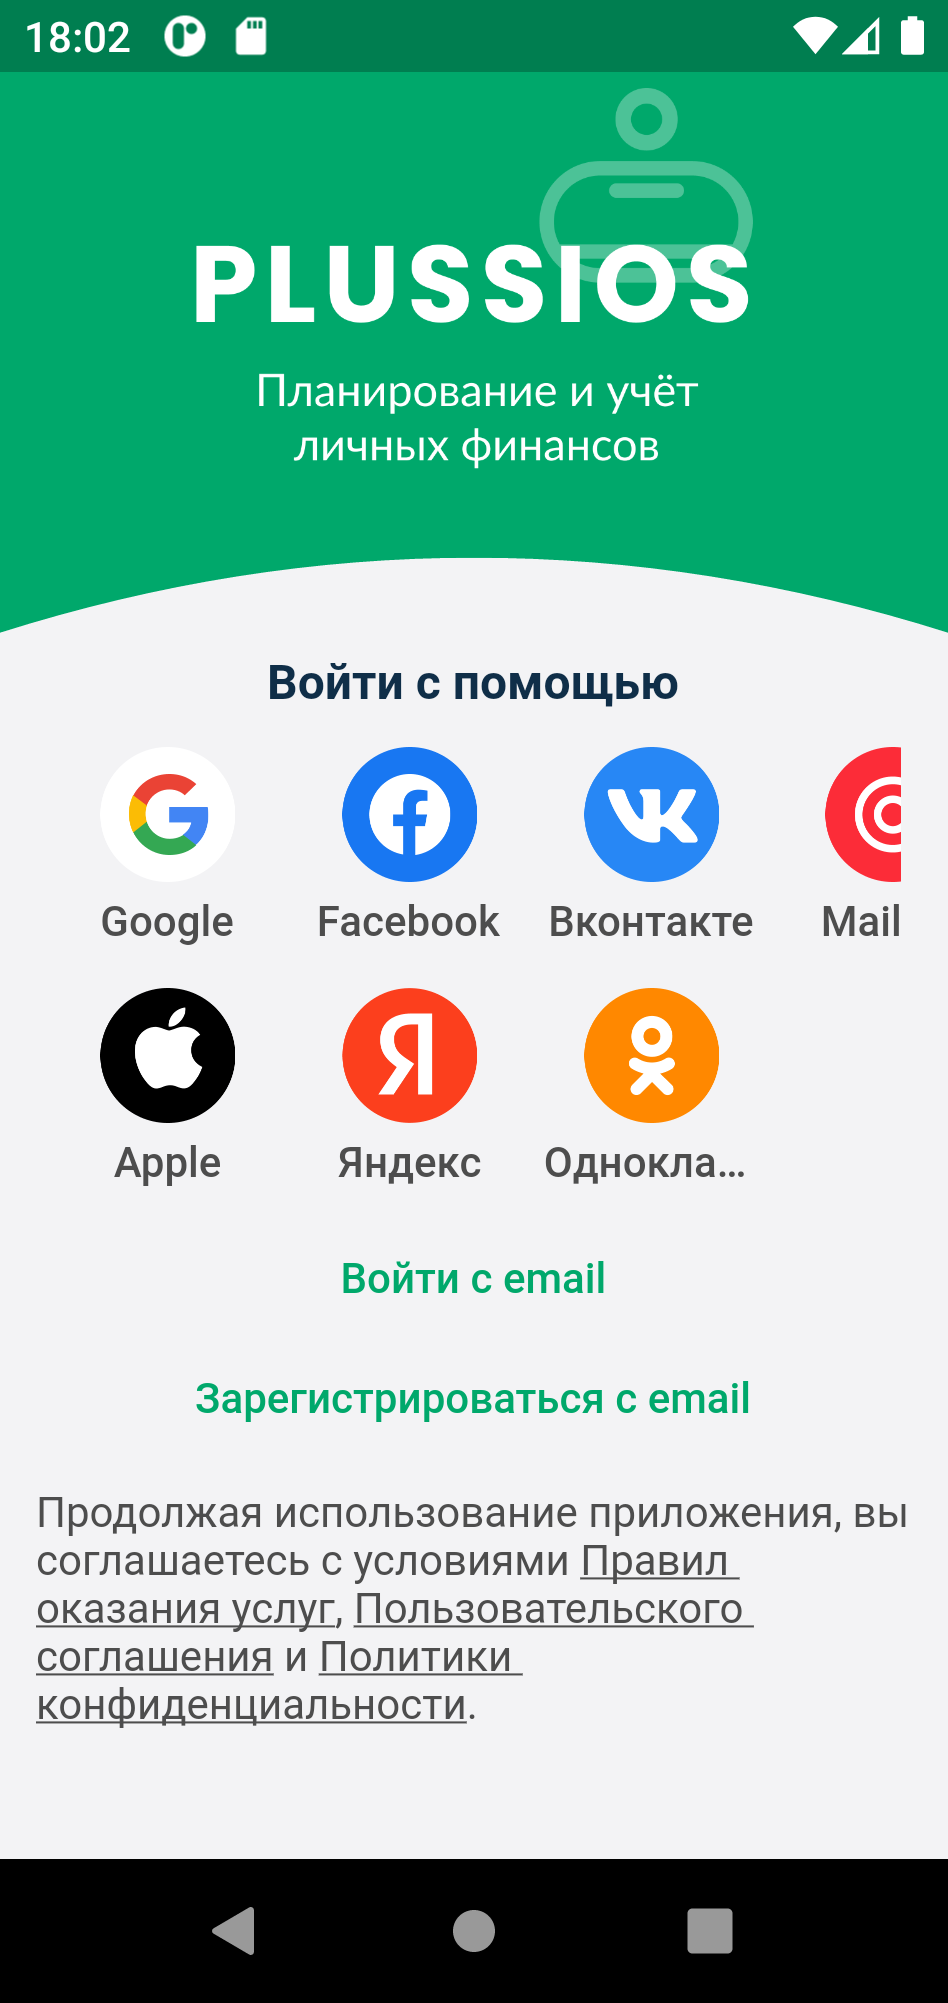 Mobile Plussios, login screen